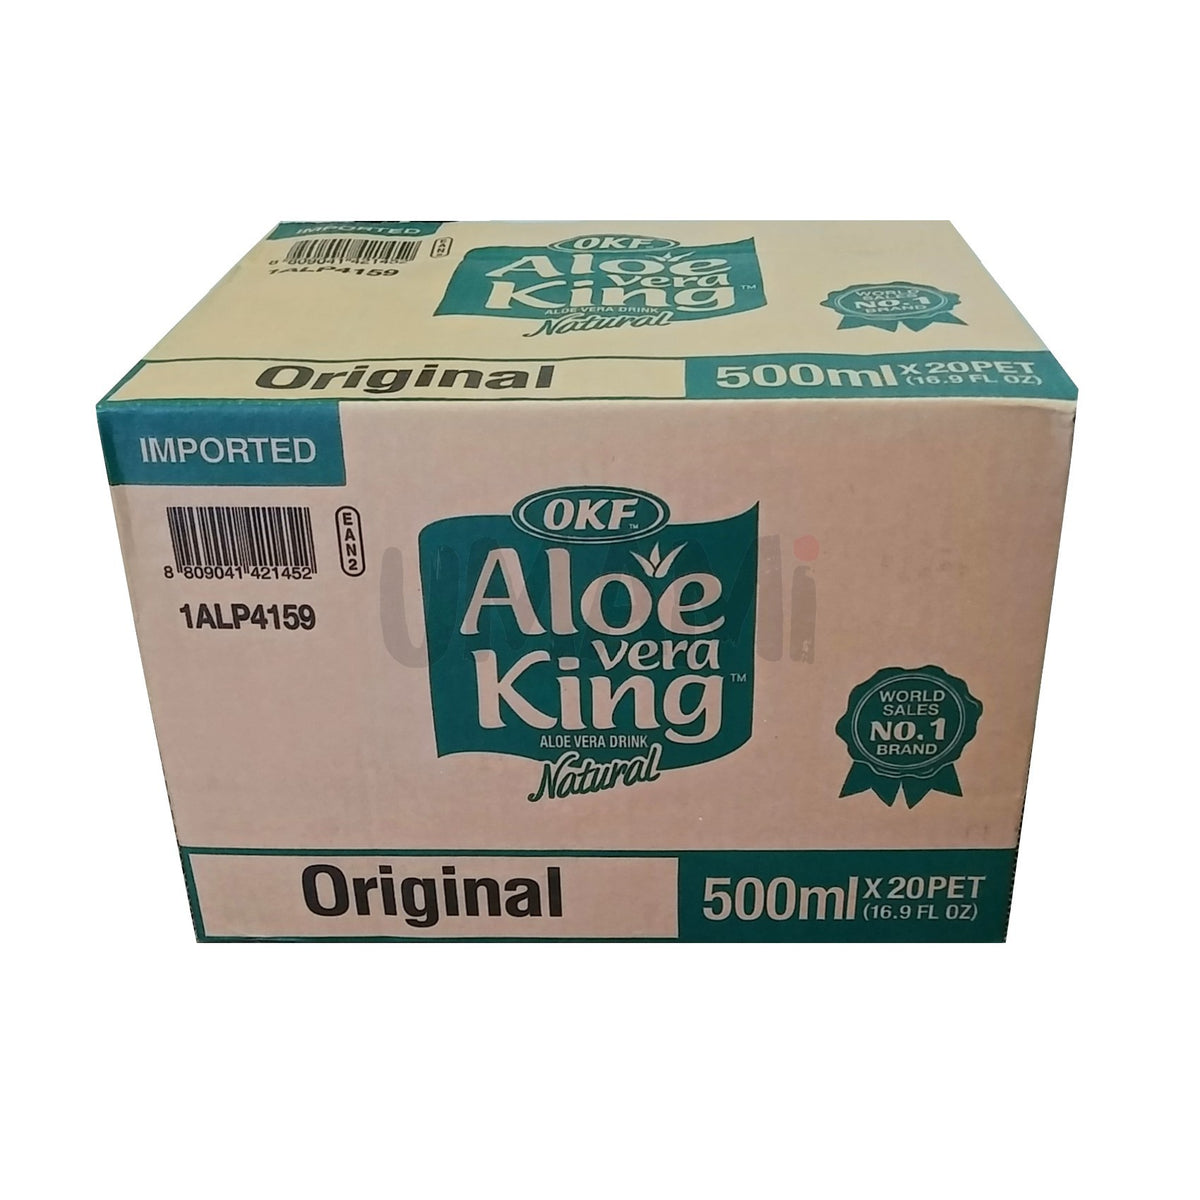 Okf Aloe Vera King Original 500ml X 20 Flaschen Kartonbestellung Ka Umami Gmbh 7114